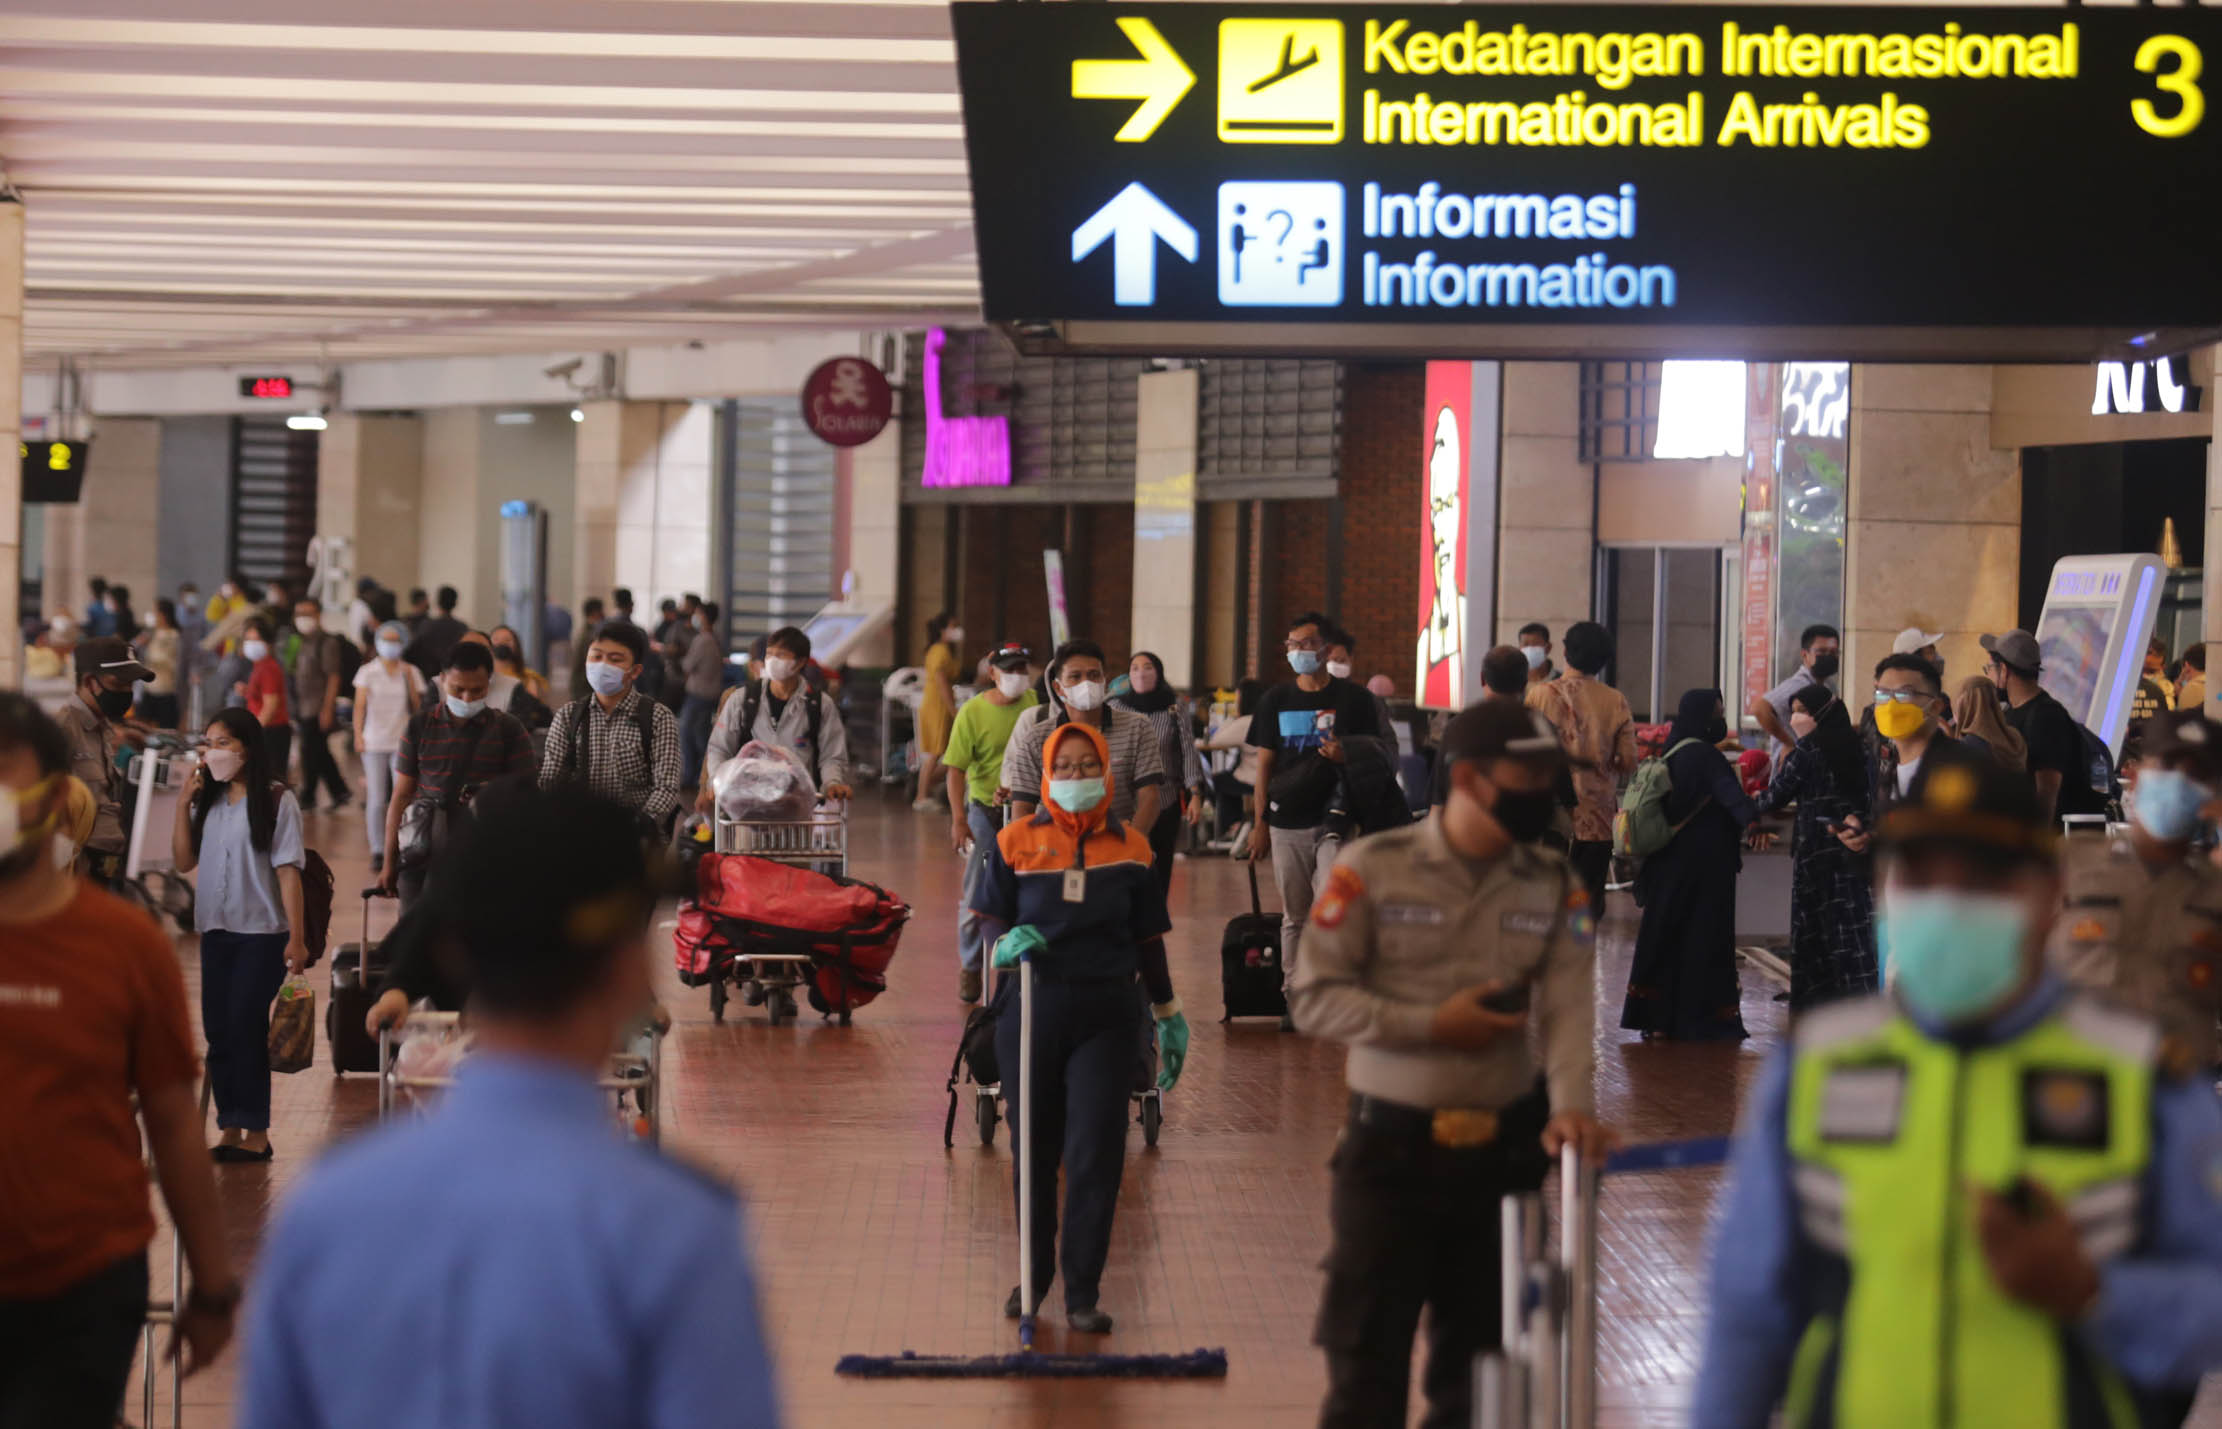 Sejumlah penumpang pesawat berjalan di area Terminal 2F Internasional Bandara Soekarno Hatta. PT Angkasa Pura II mengoperasikan kembali Terminal 2F untuk kedatangan penumpang internasional guna mengantisipasi penumpukan penumpang setelah sebelumnya hanya Terminal 3 yang digunakan sebagai lokasi ketibaan internasional. Jumat 17 Desember 2021. Foto : Panji Asmoro/TrenAsia